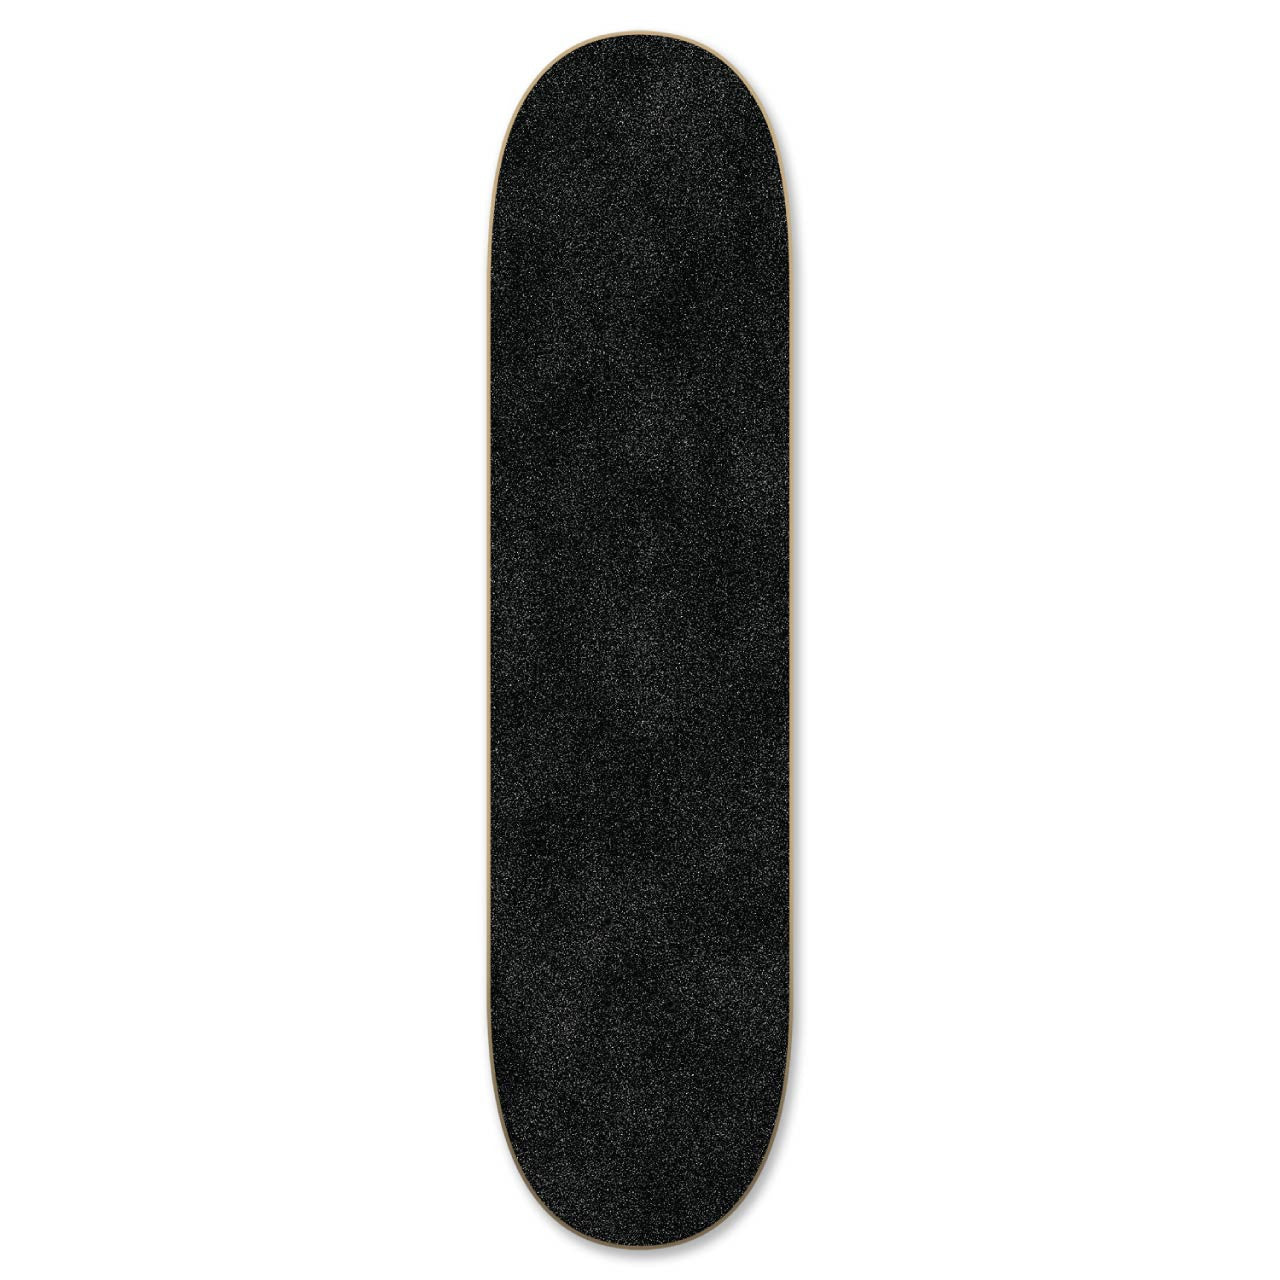 Graphic Skateboard Deck - Tiedye Original